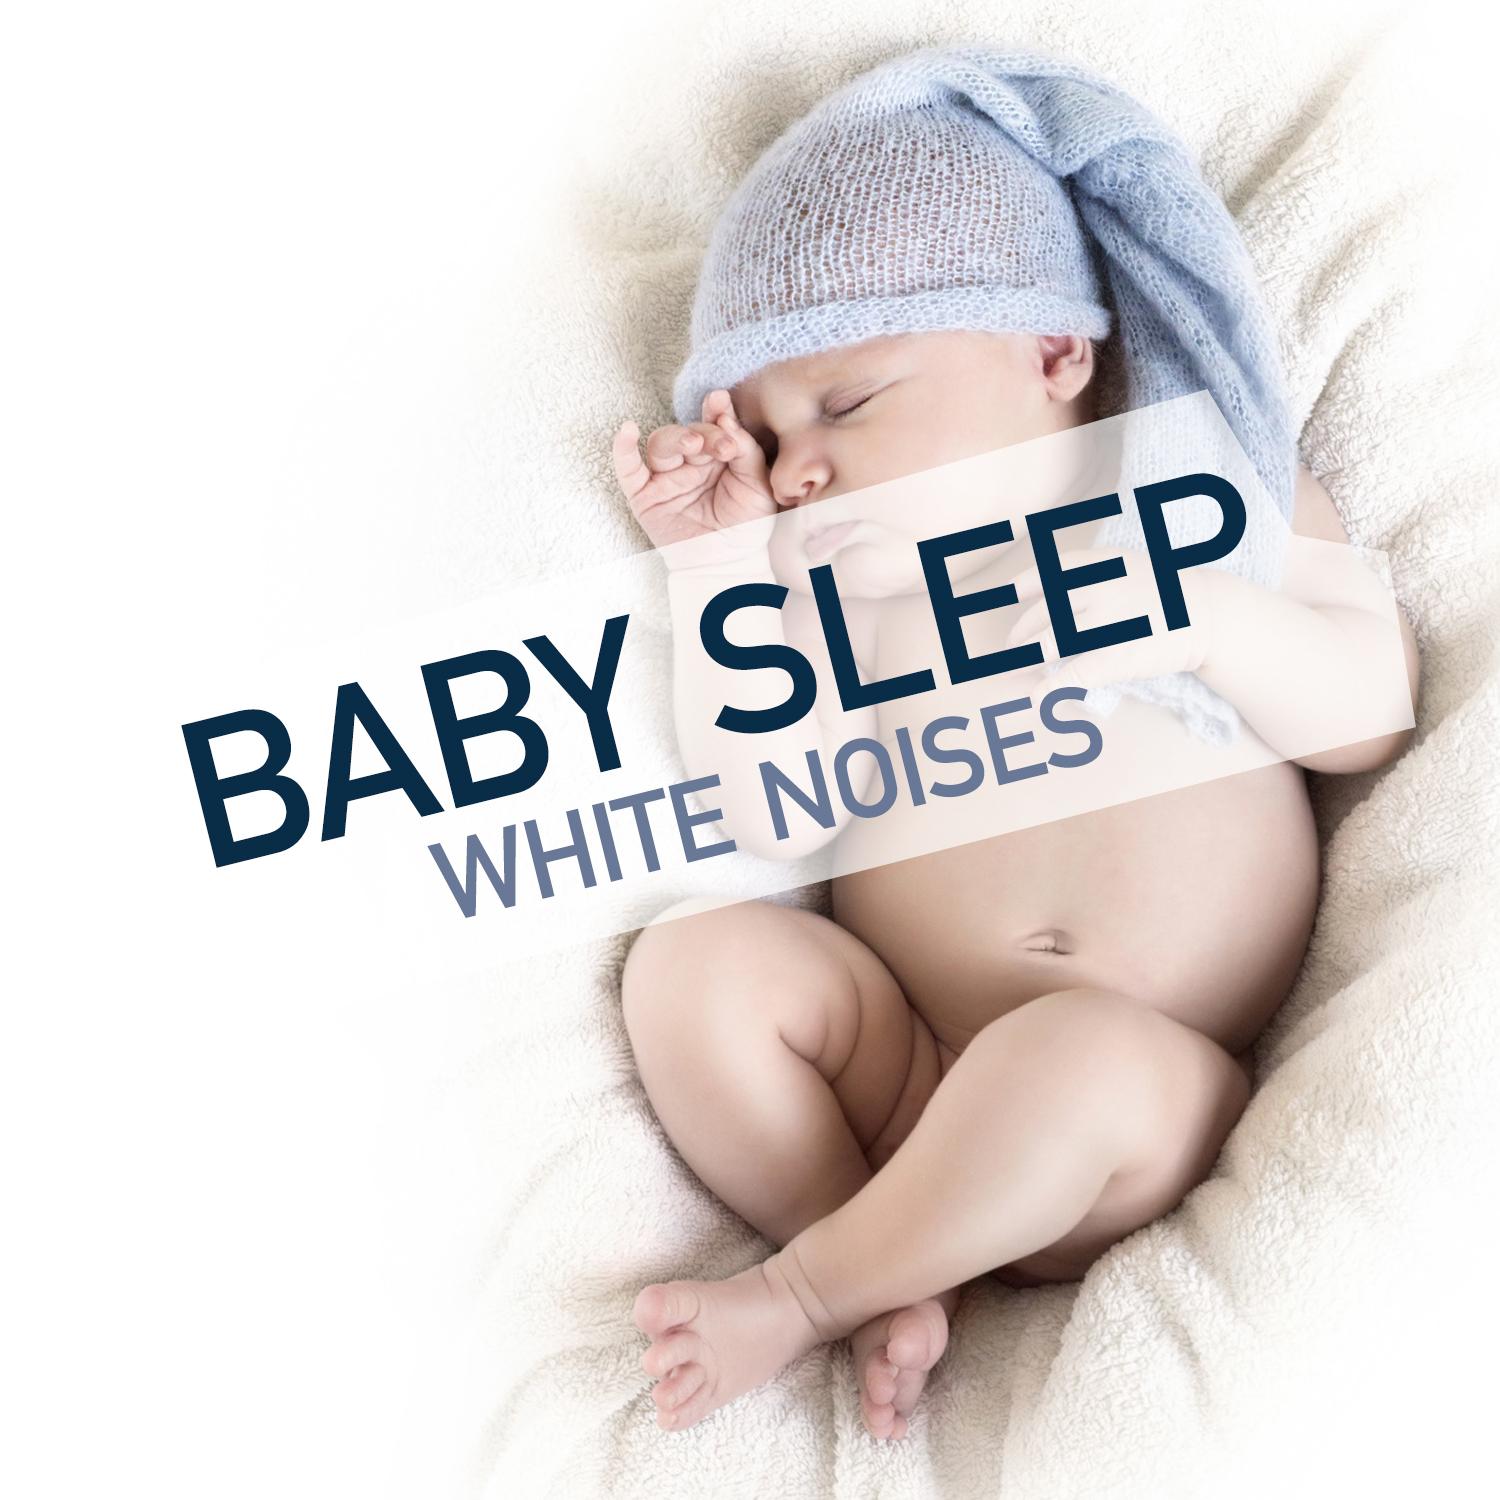 Baby Sleep: White Noises